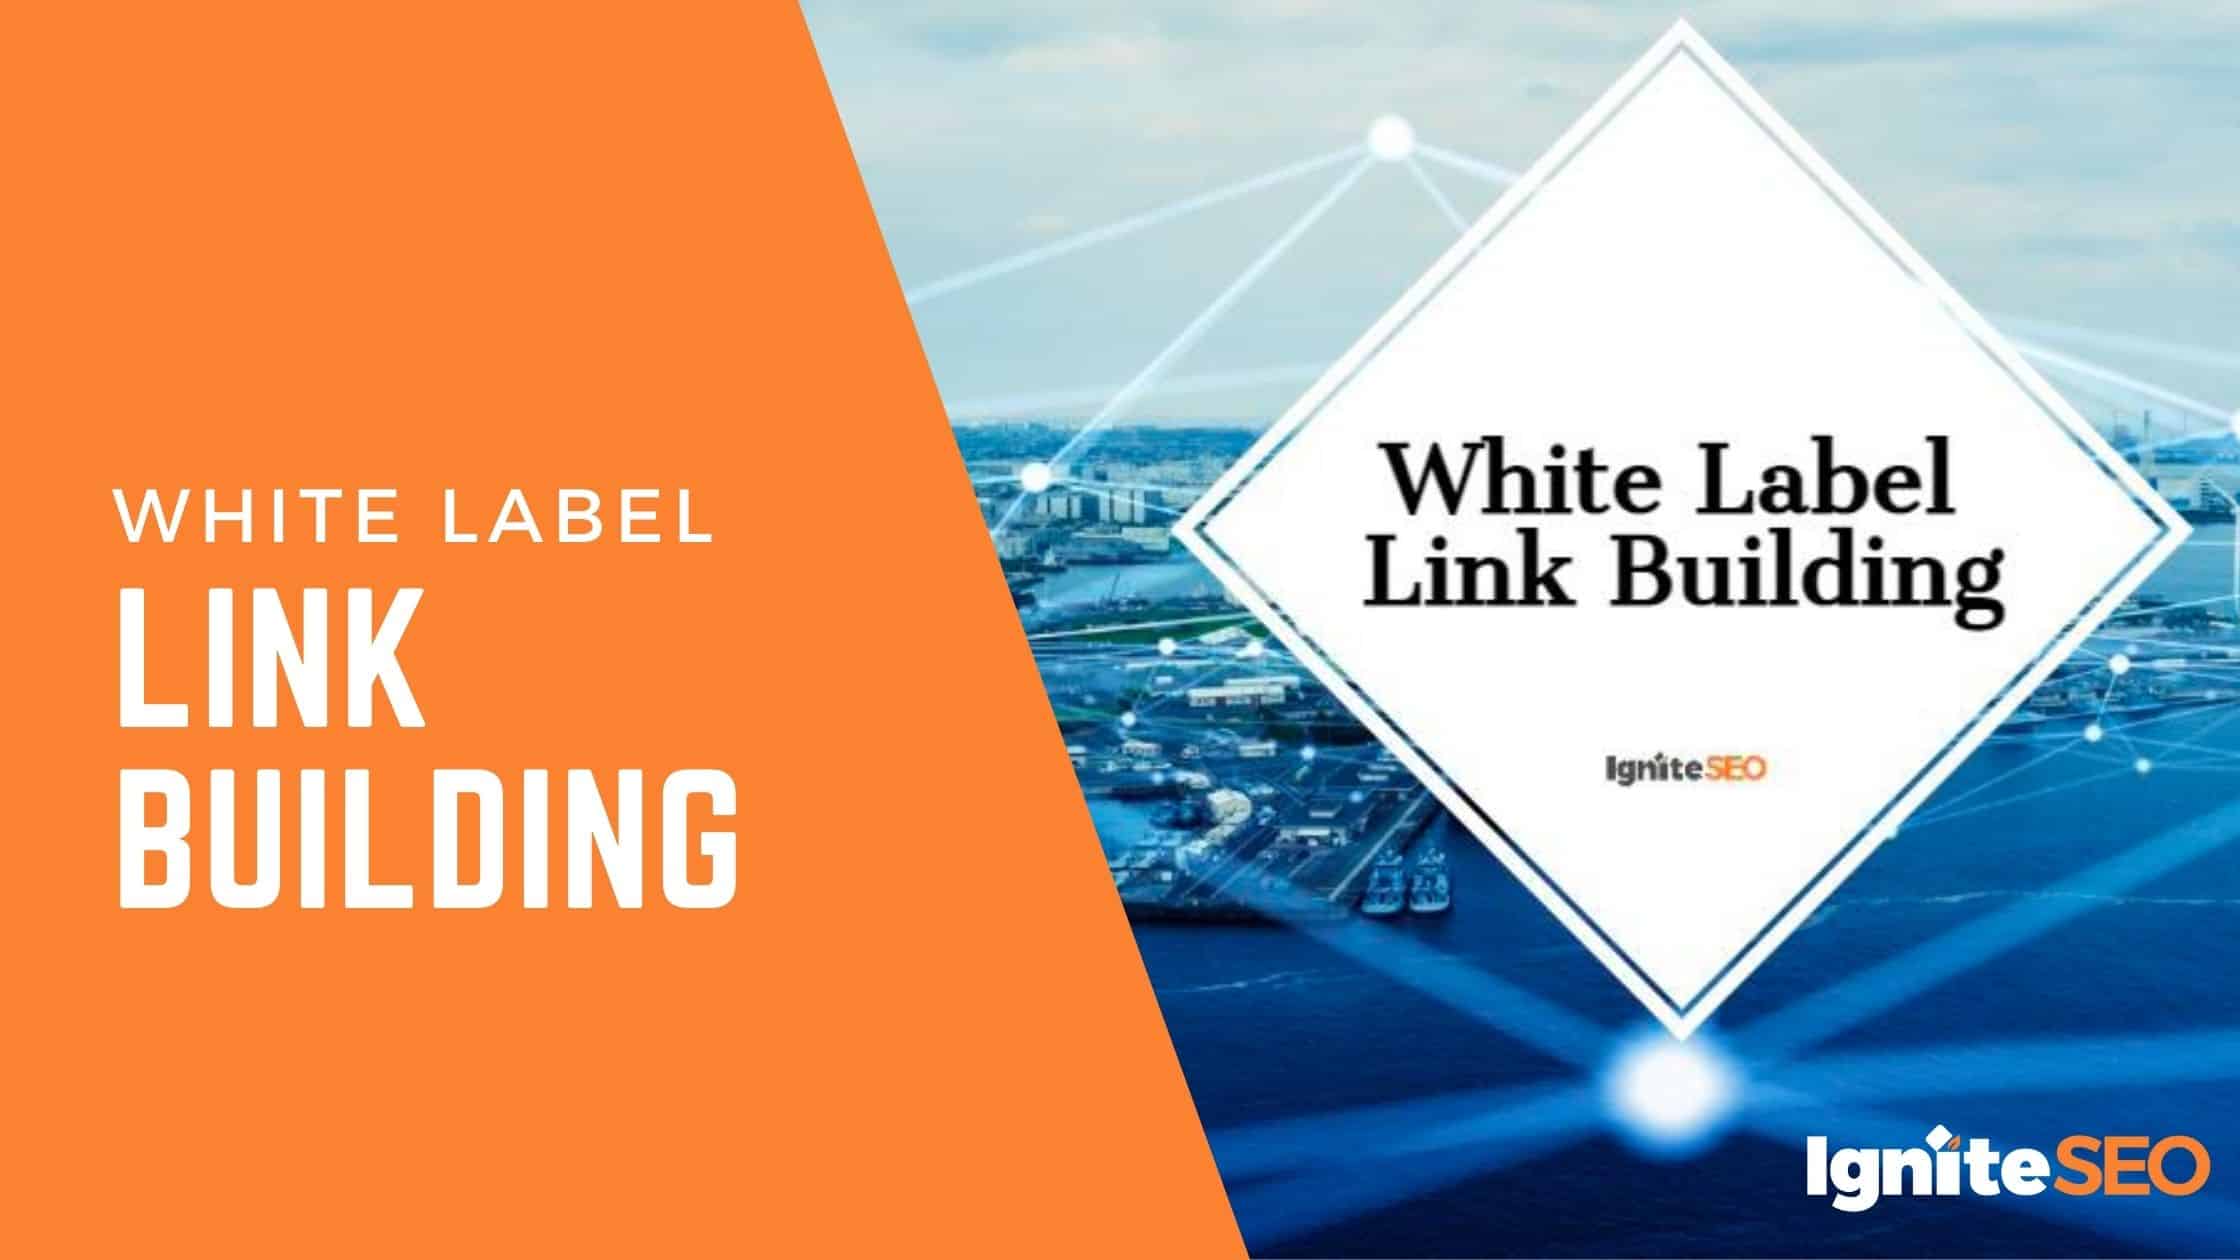 White label link building